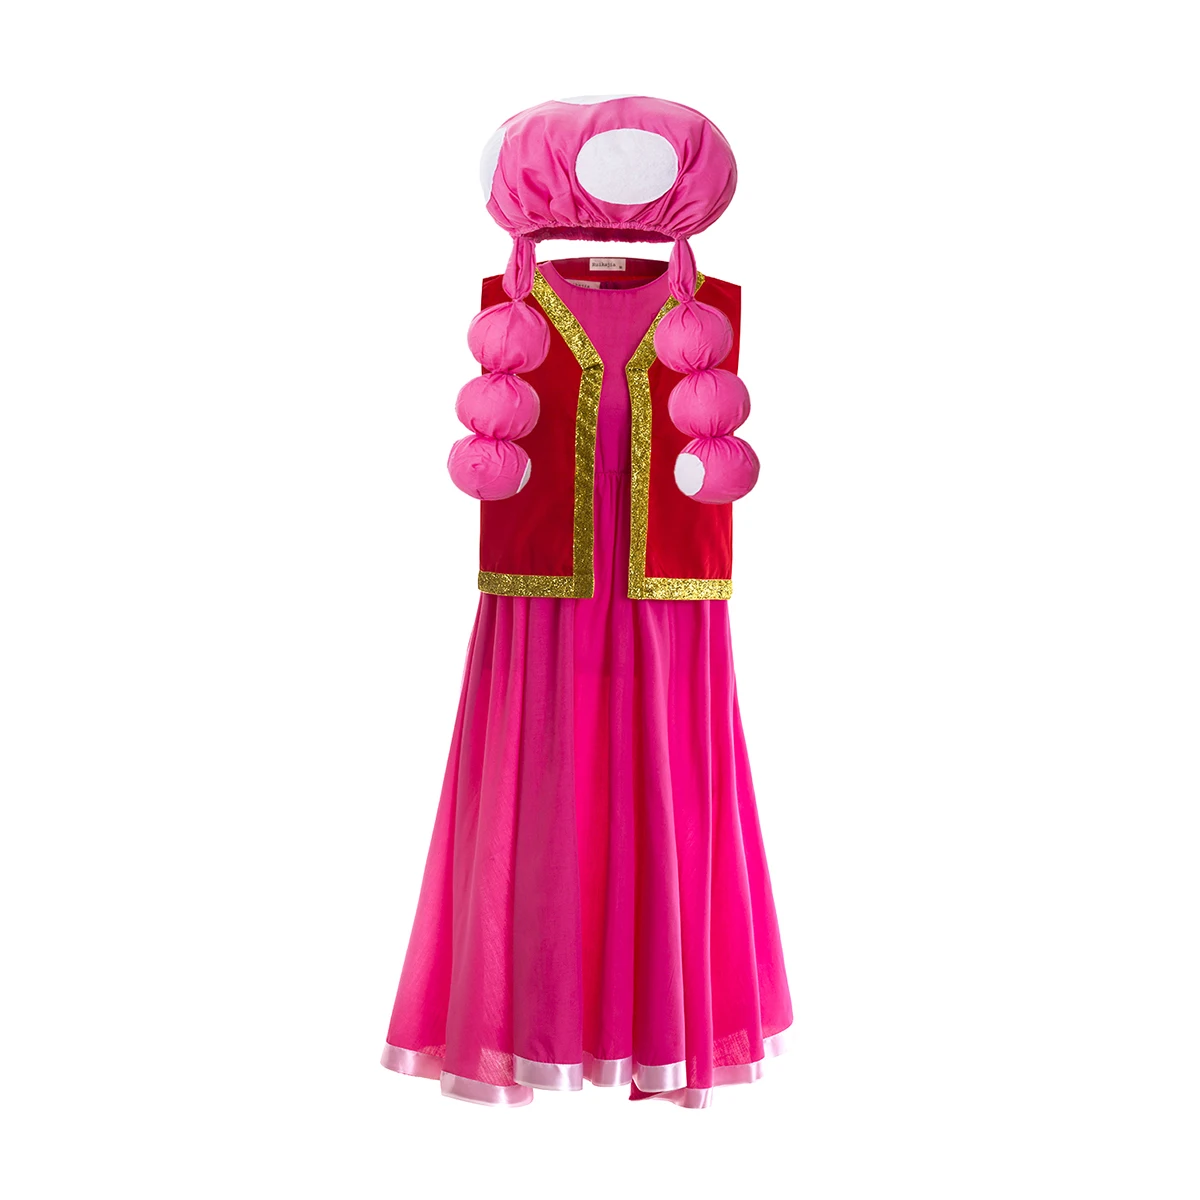 

Girls dress Mushroom costume Halloween Outfit Woodland Toadstool costume Toad Pink dress